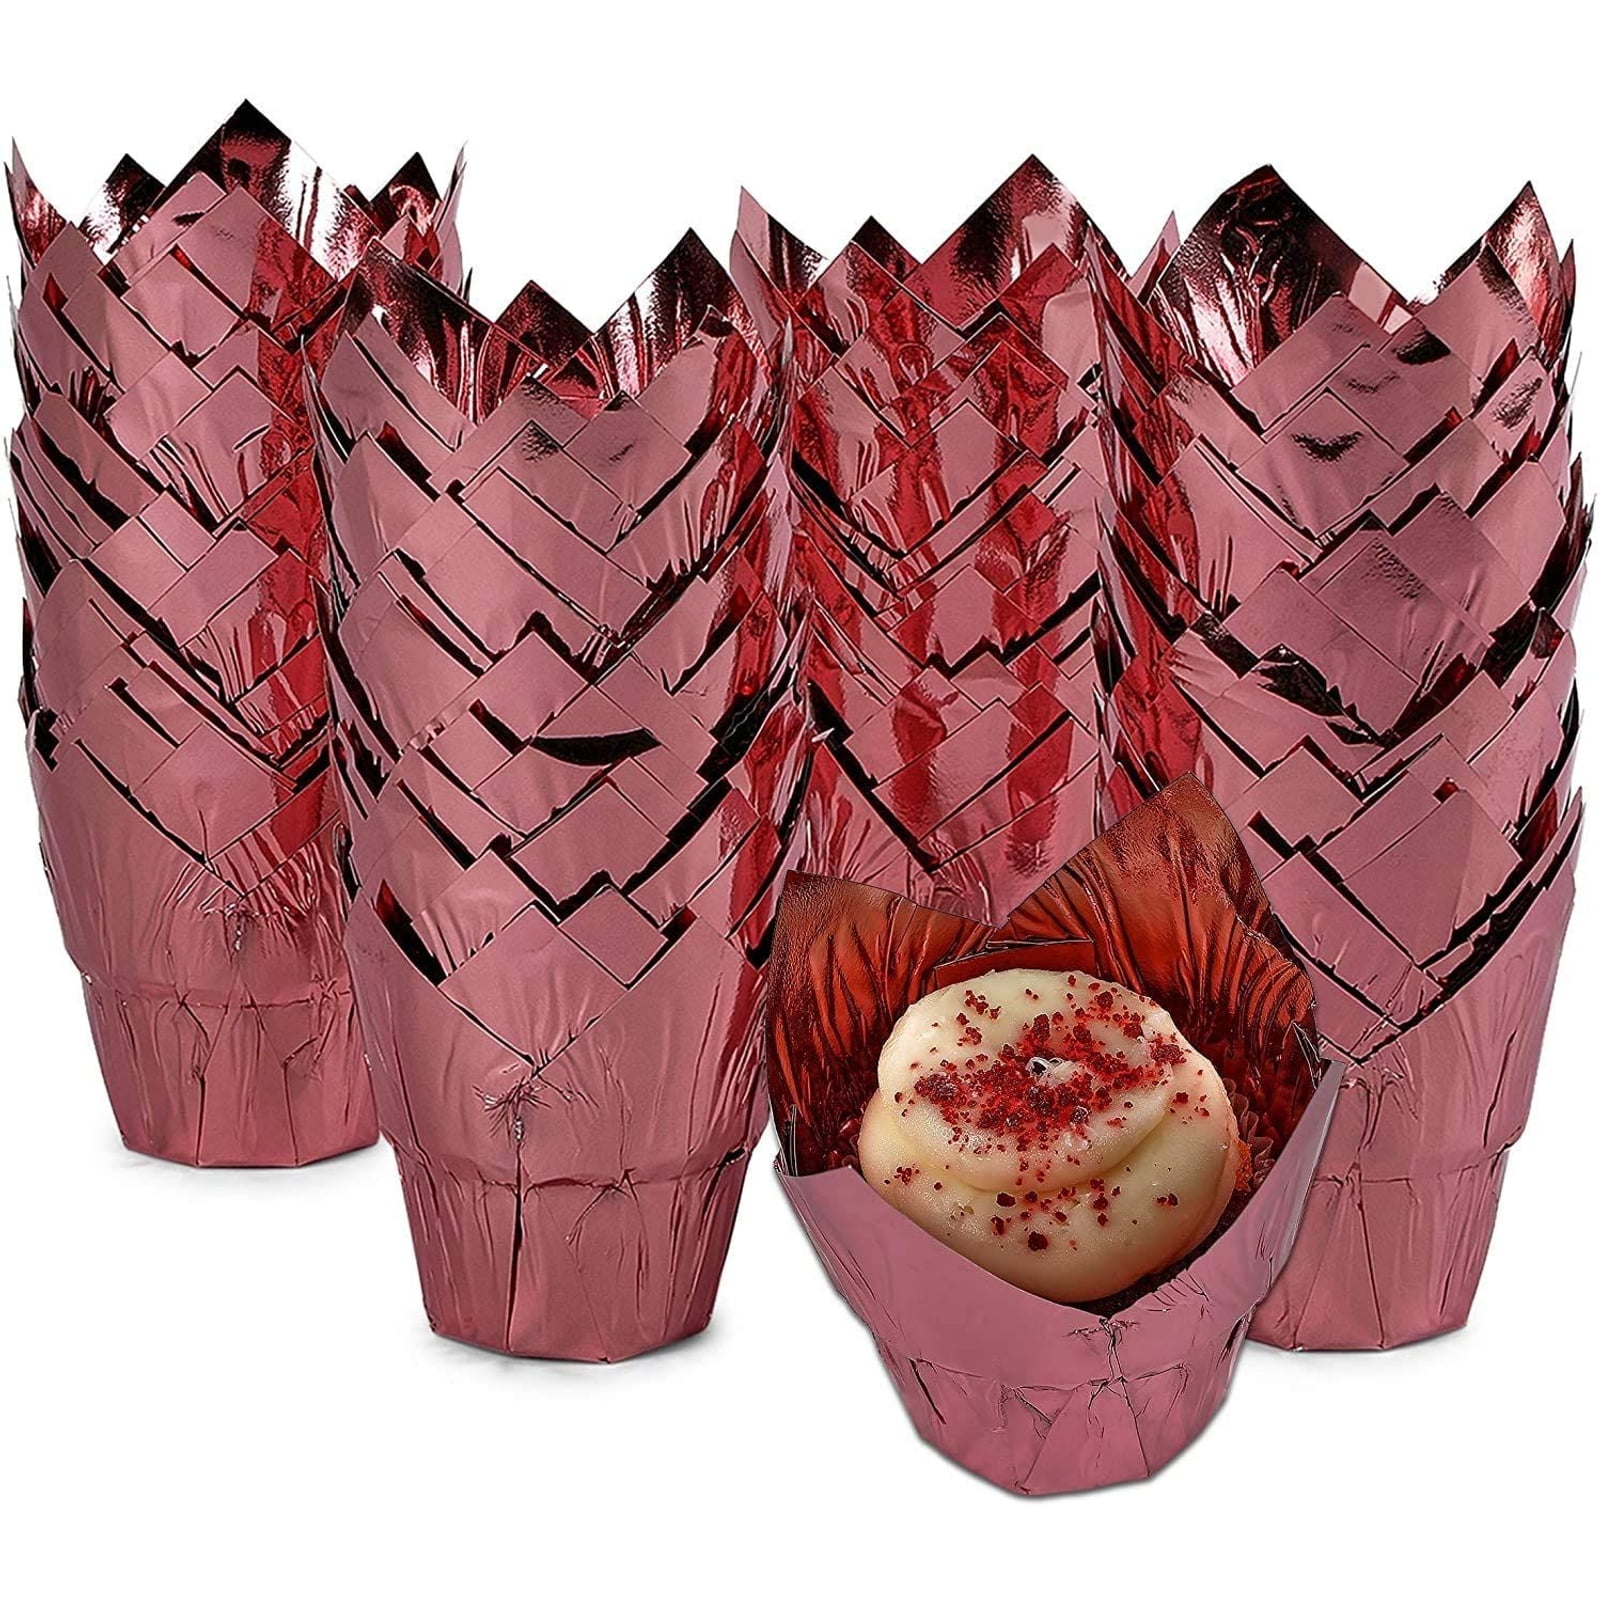 100 Orange damask leaf black cupcake liners baking paper cup muffin cases 